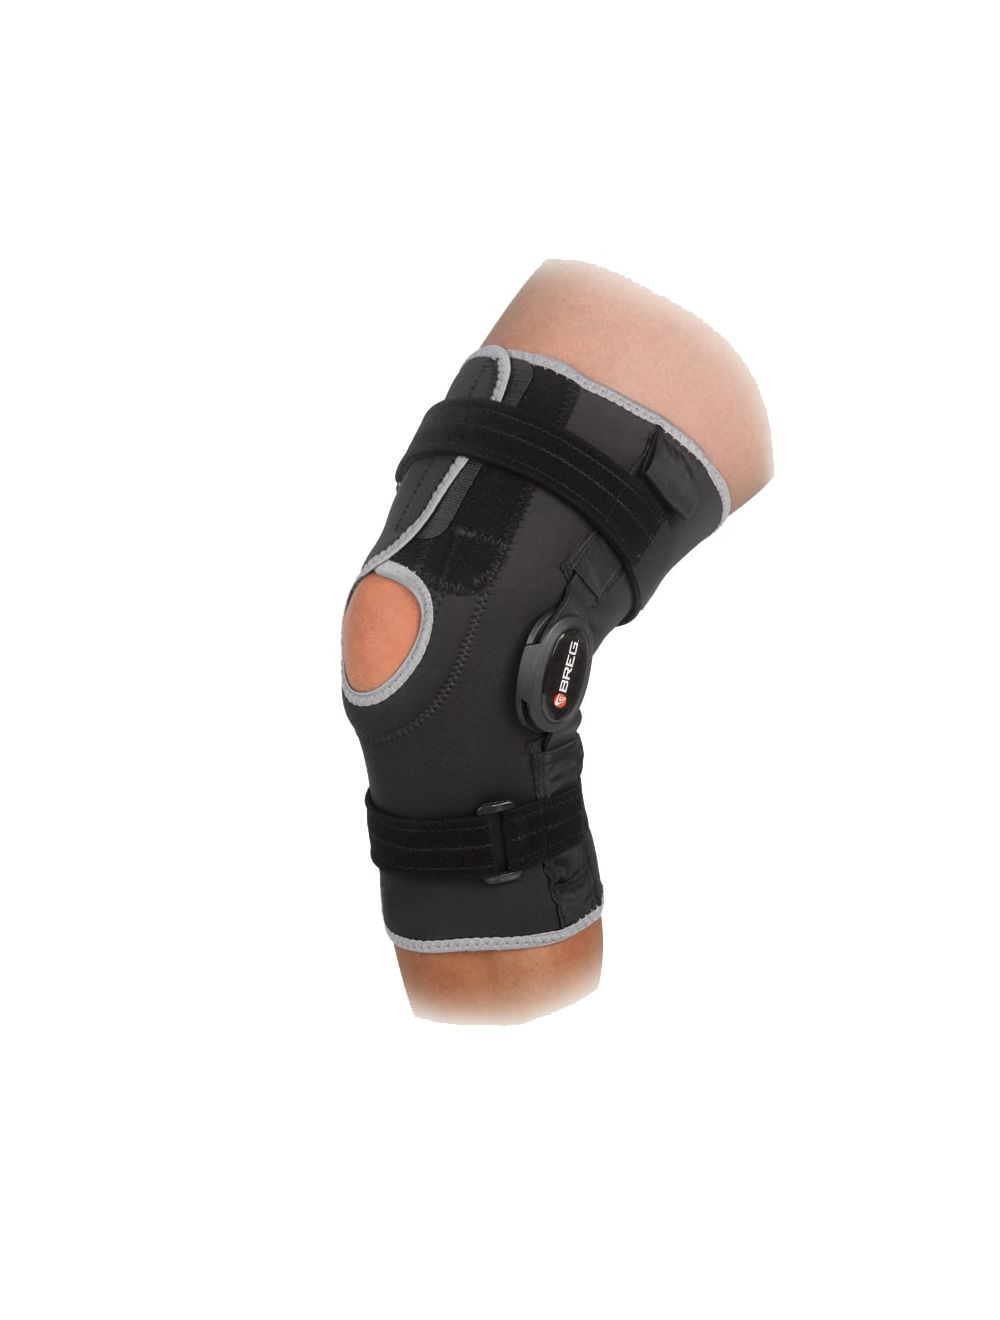 https://www.usawheelchair.com/pub/media/catalog/product/cache/ddb236bdd69ff7cc1401d94c525e1745/k/n/knee-bracing-breg-crossover-knee-brace-1.jpg